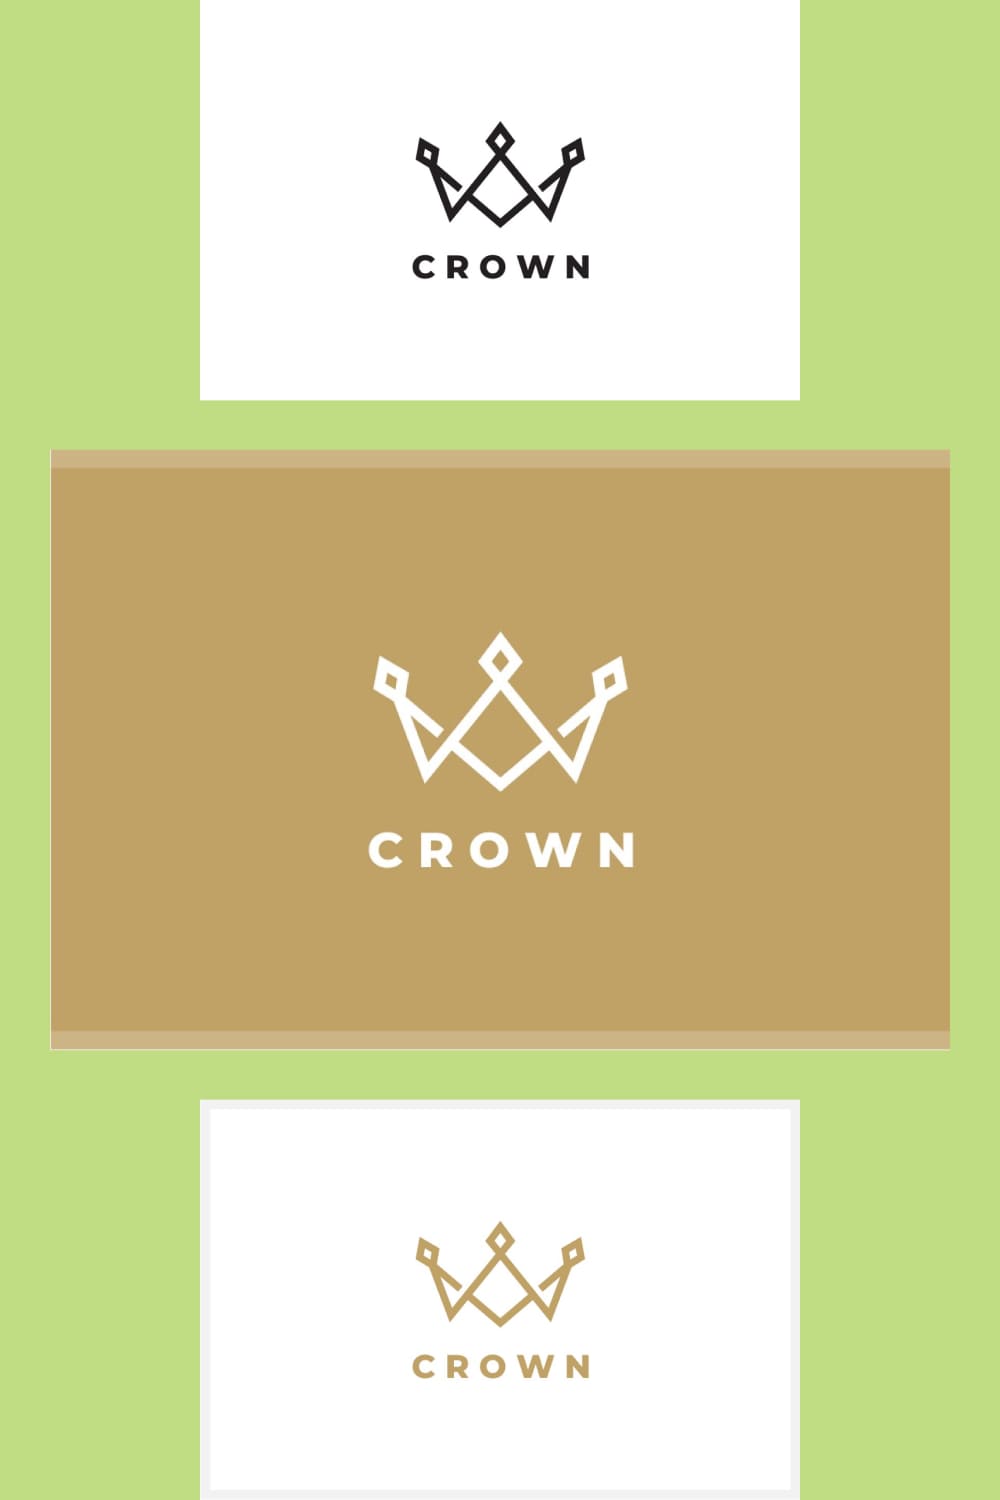 Simple crown logos in two colors.